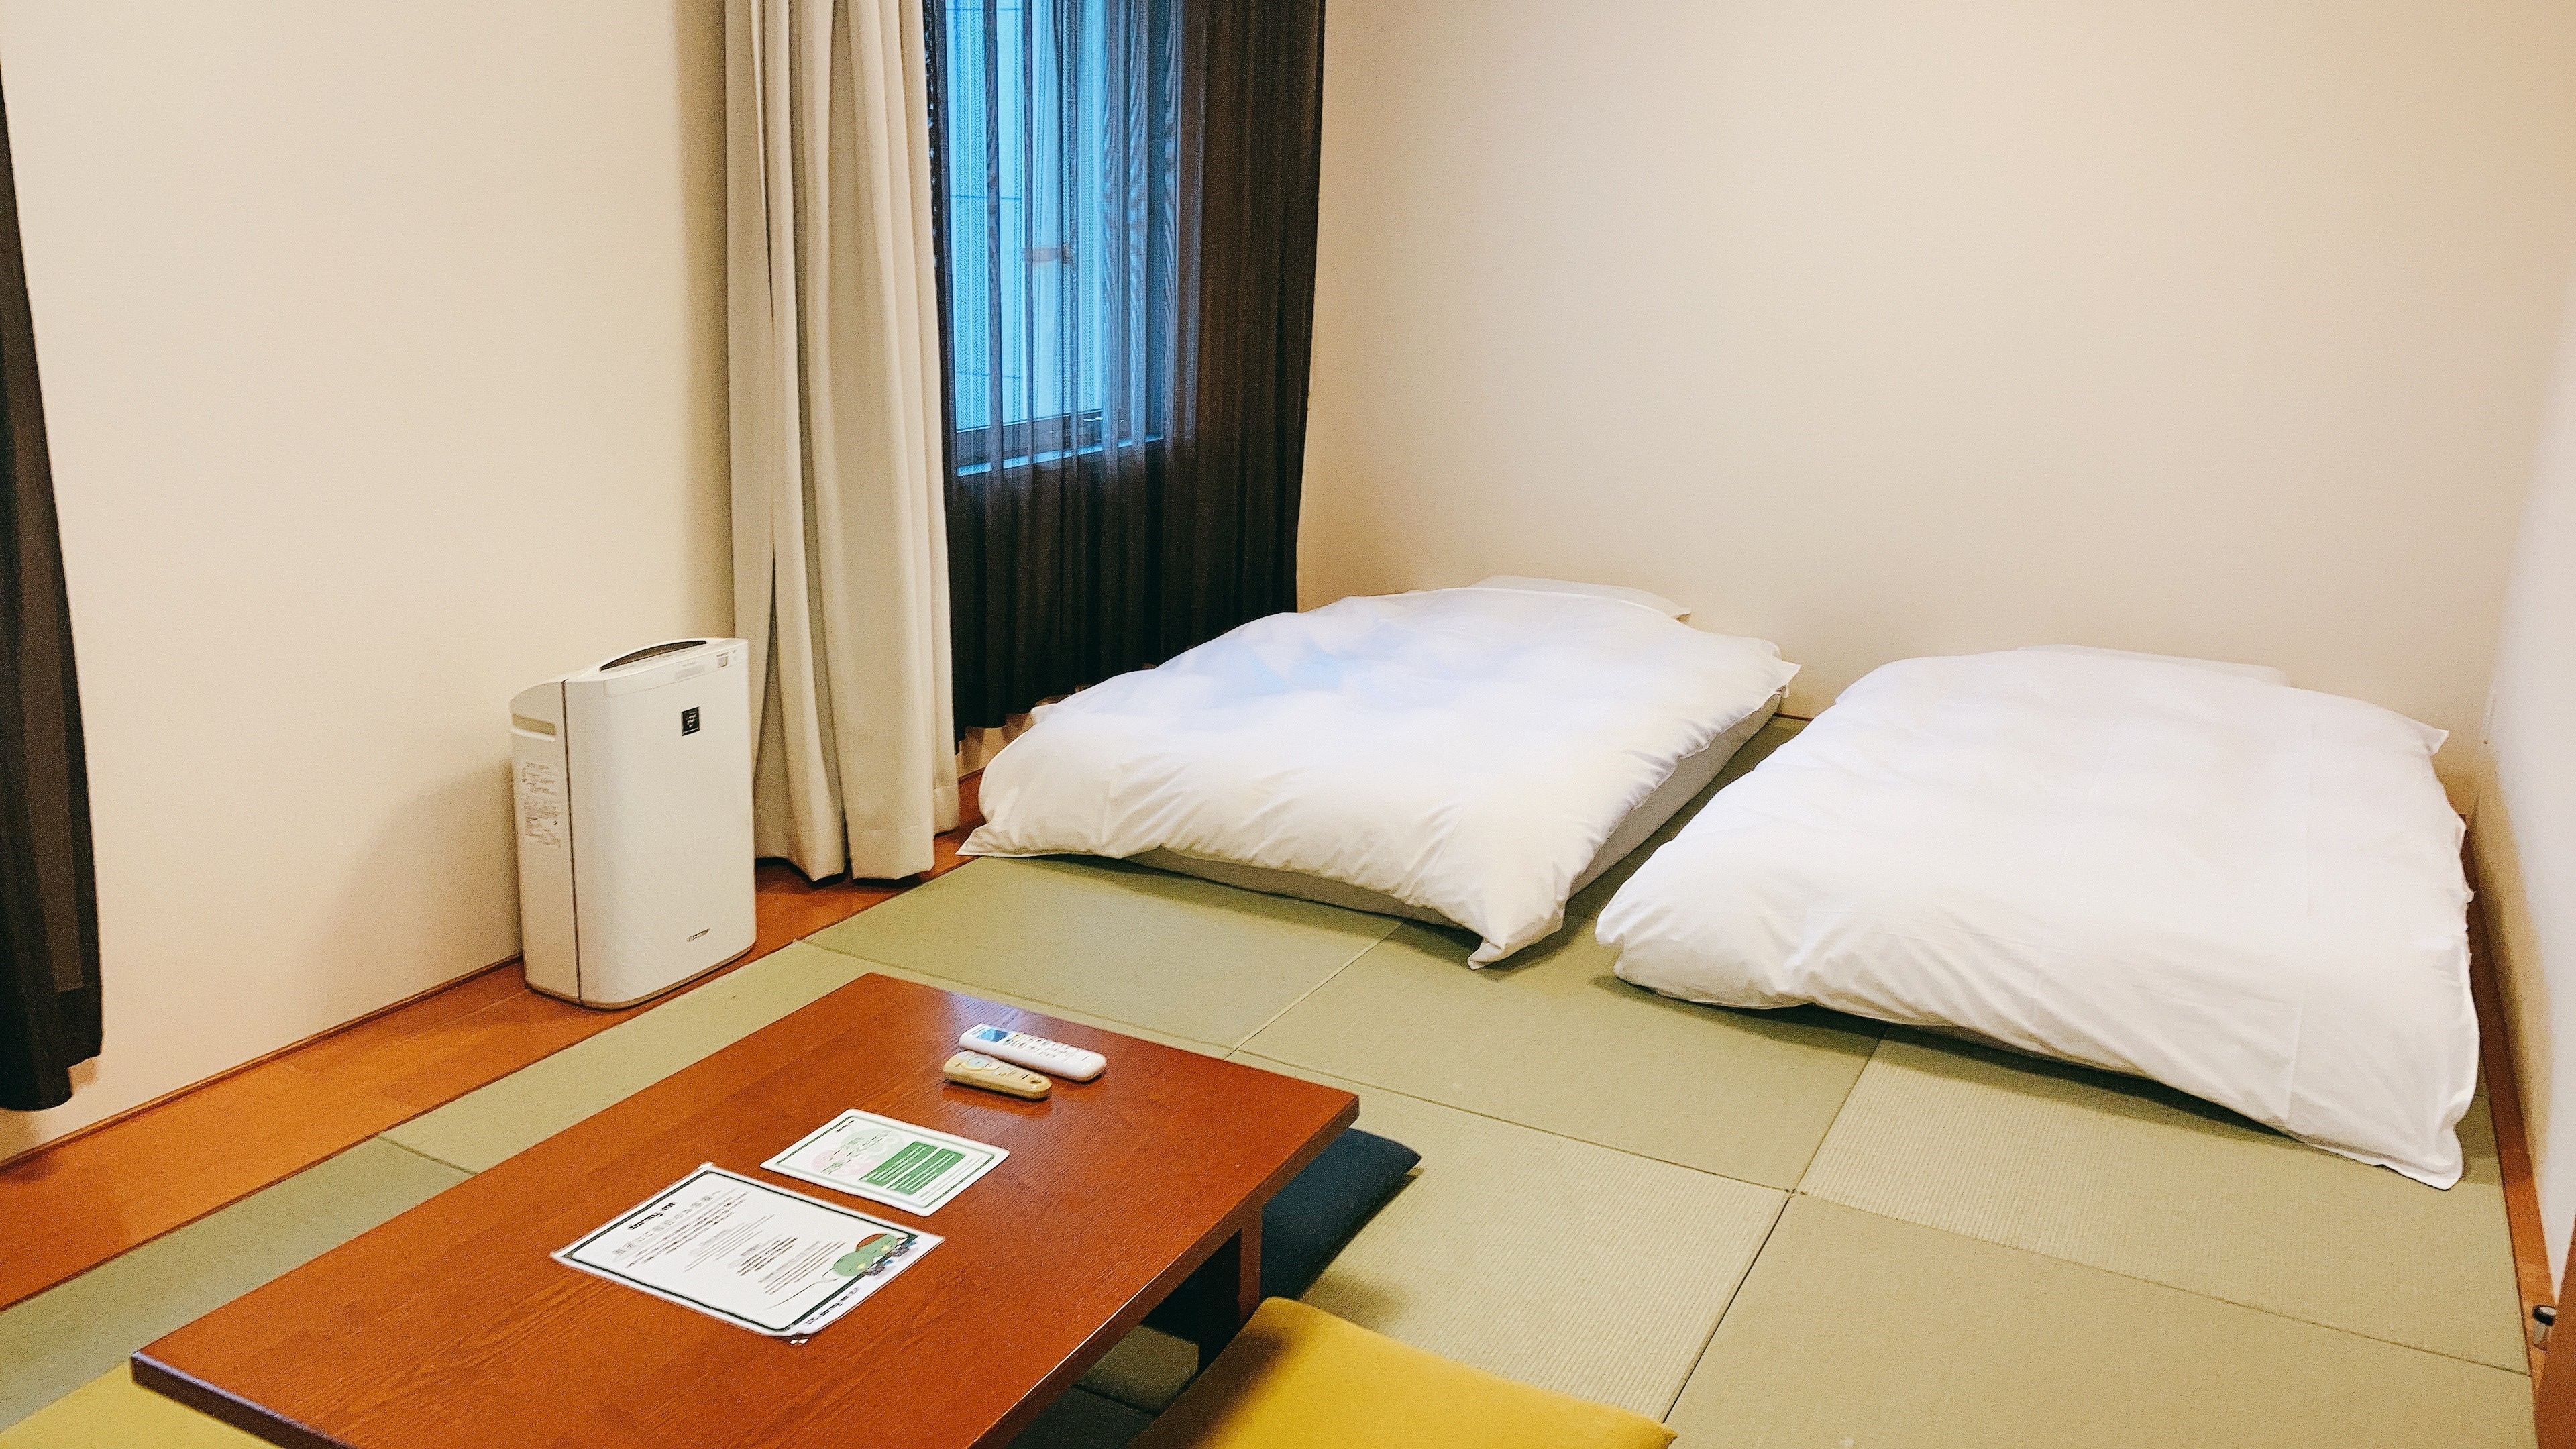 Japanese-style room 30.0 square meters, maximum 5 people (5 futons), 37-inch TV, bathroom